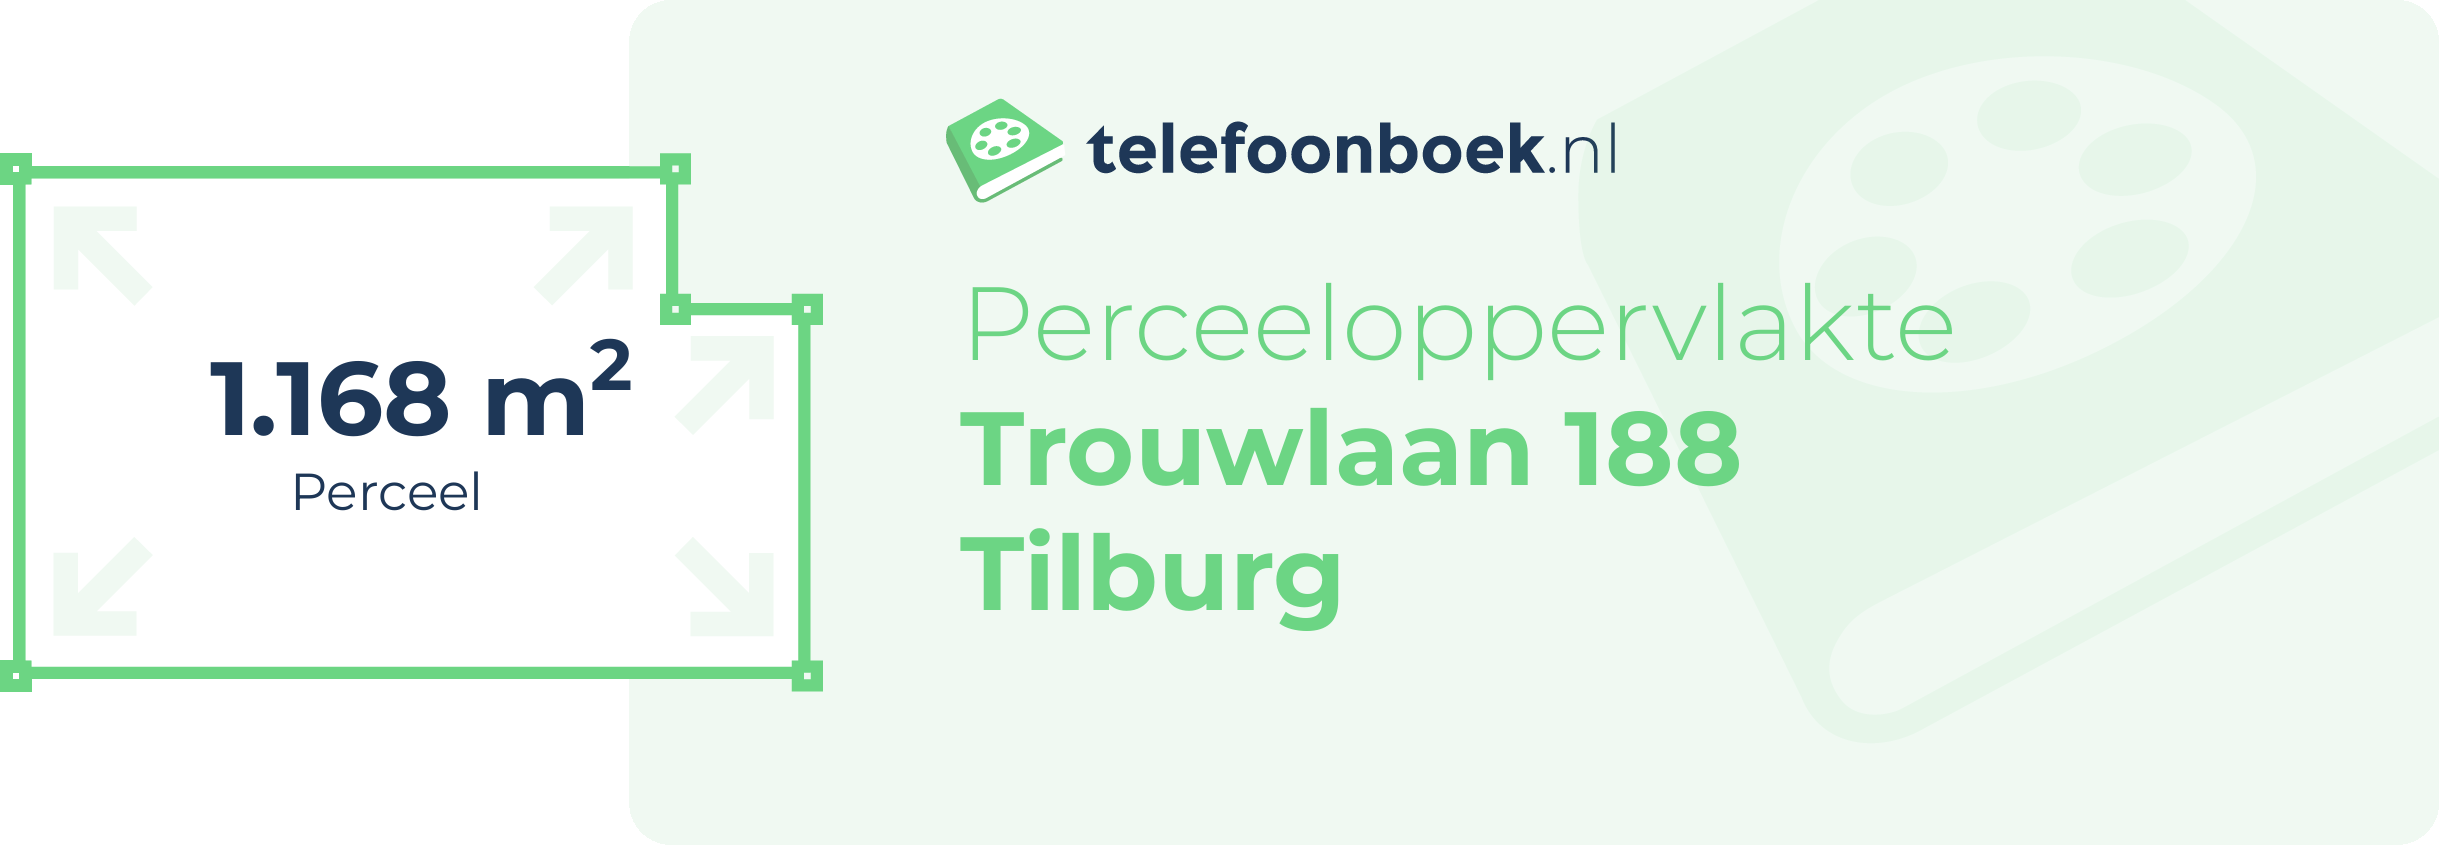 Perceeloppervlakte Trouwlaan 188 Tilburg